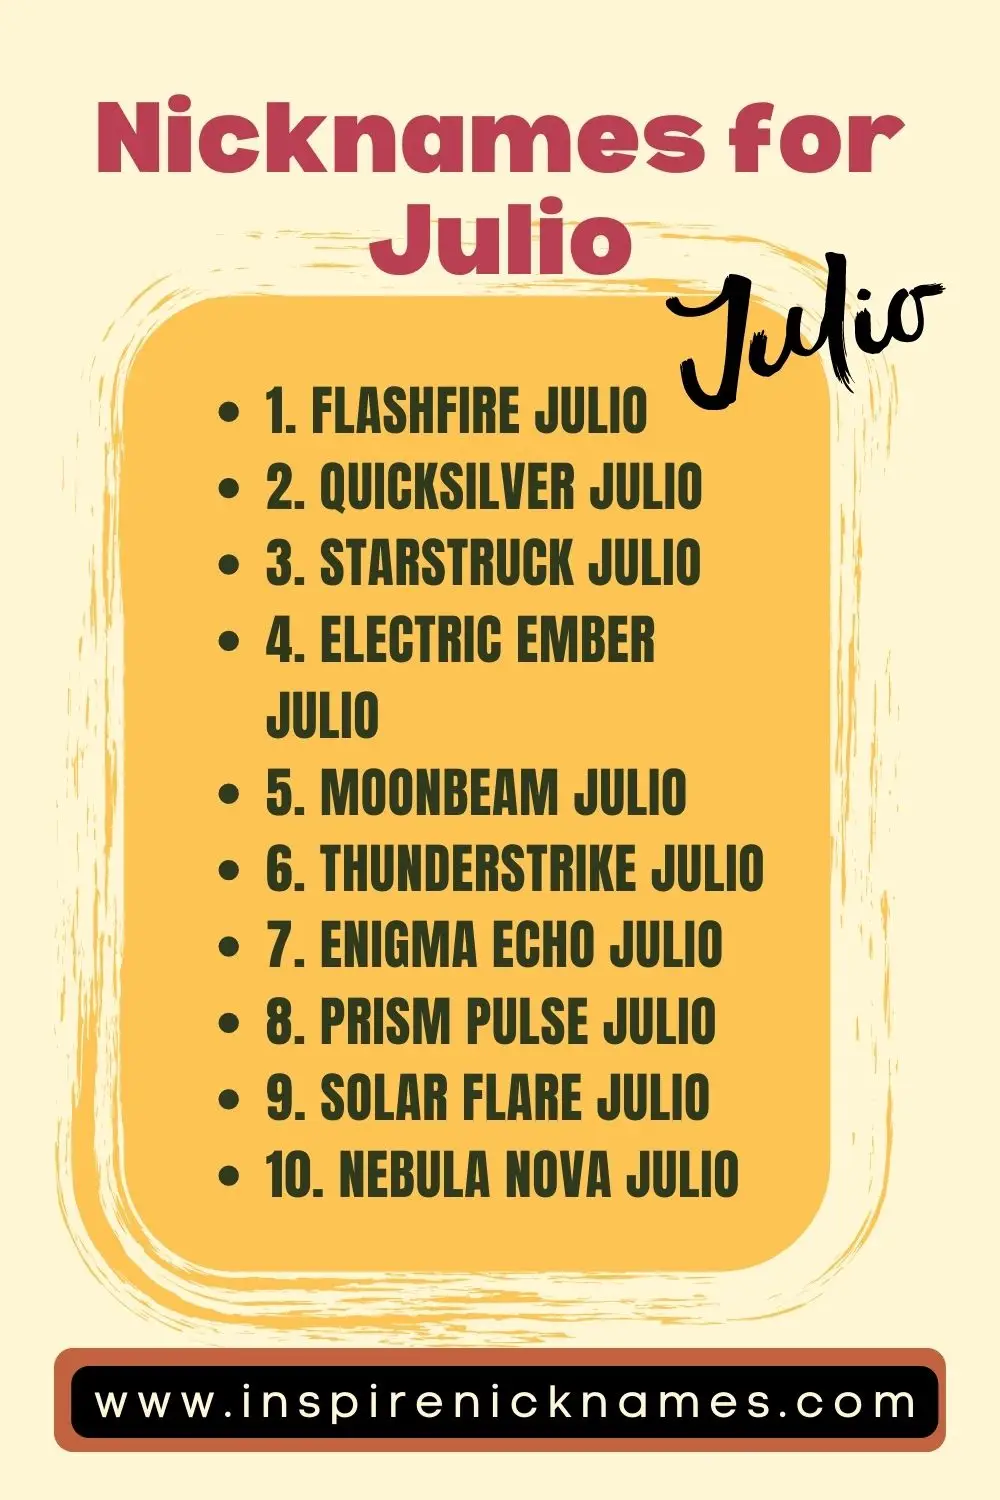 Nicknames for Julio list ideas